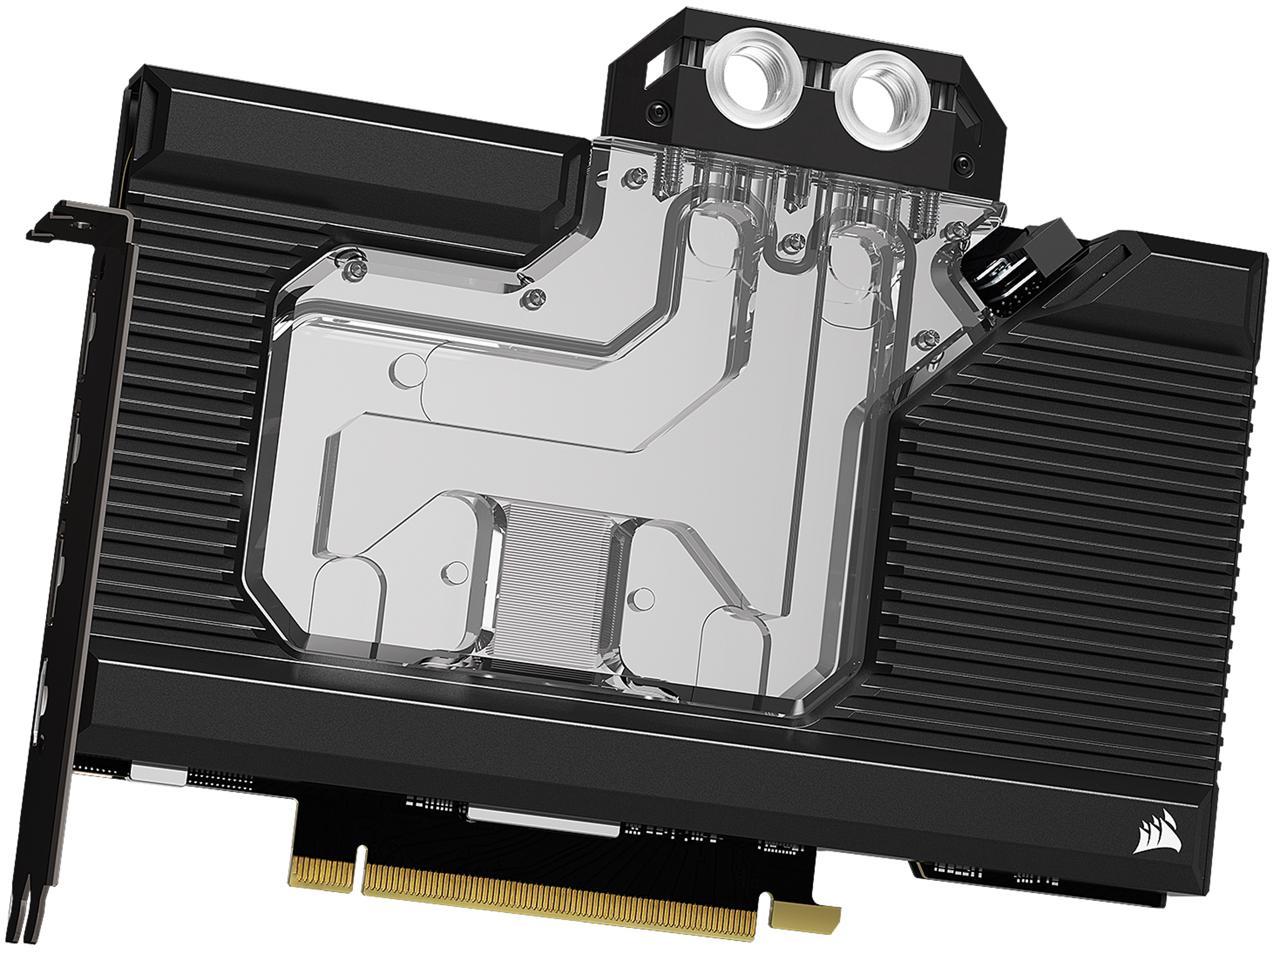 CORSAIR Hydro X Series XG7 RGB 30-SERIES FOUNDERS EDITION GPU Water Block (3090) - Fits NVIDIA GeForce RTX (3090) - Nickel-Plated Copper Construction - Backplate - Addressable RGB LEDs - Newegg.com